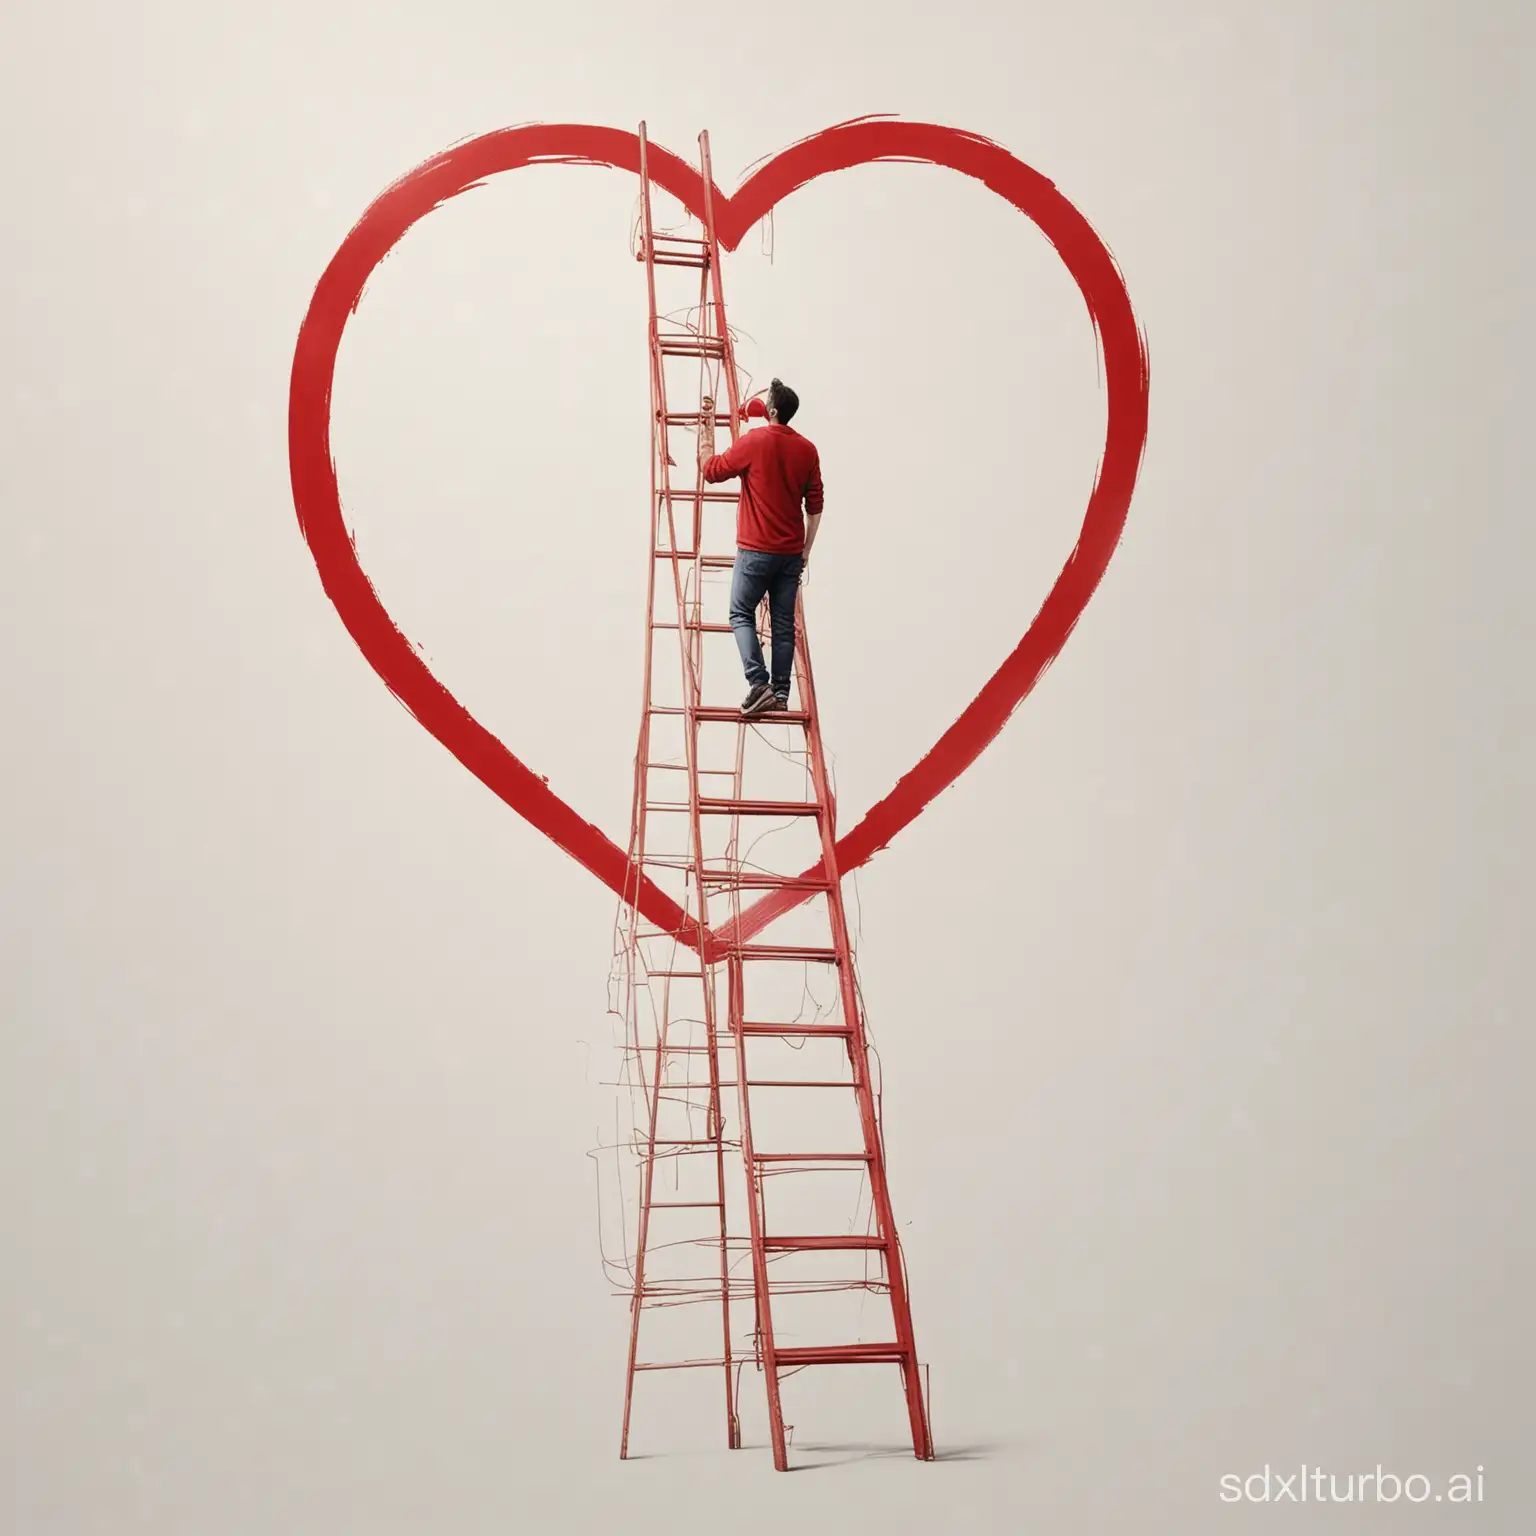 Minimalist-Poster-Man-Climbing-Red-HeartShaped-Ladder